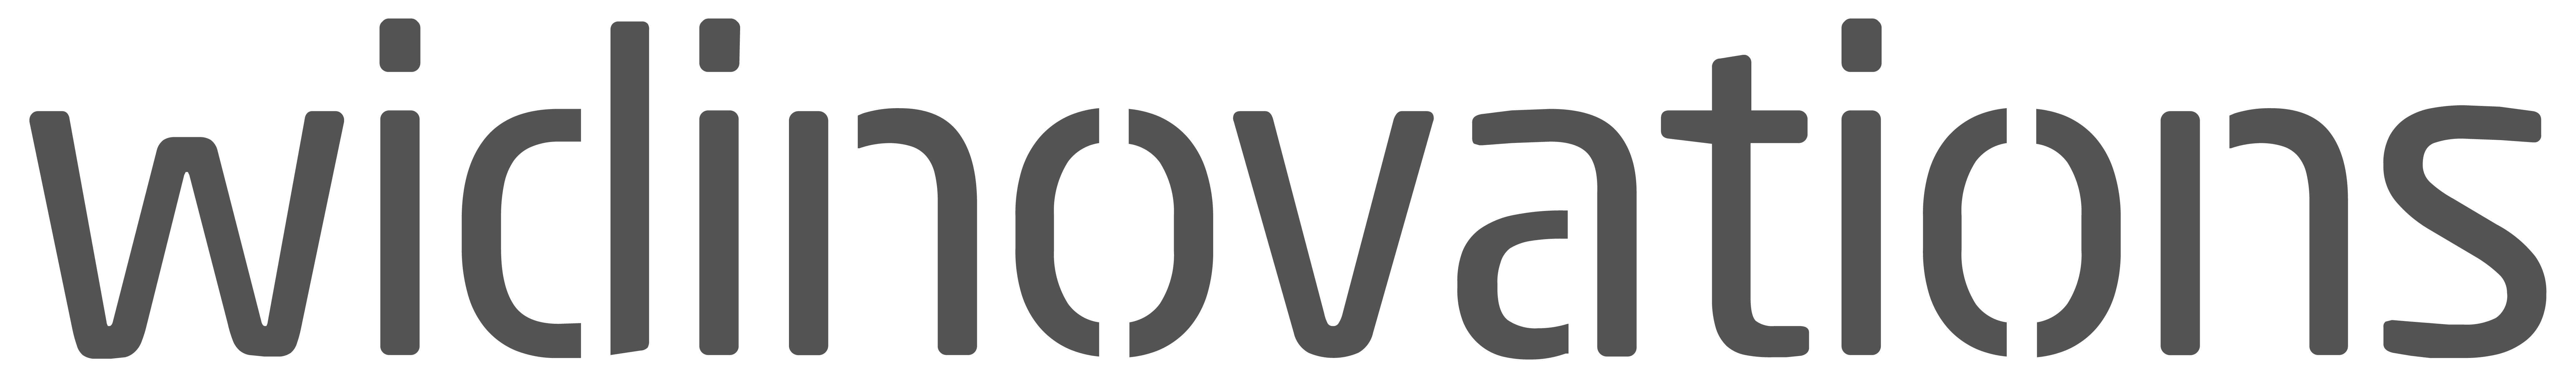 WidInovations Logo